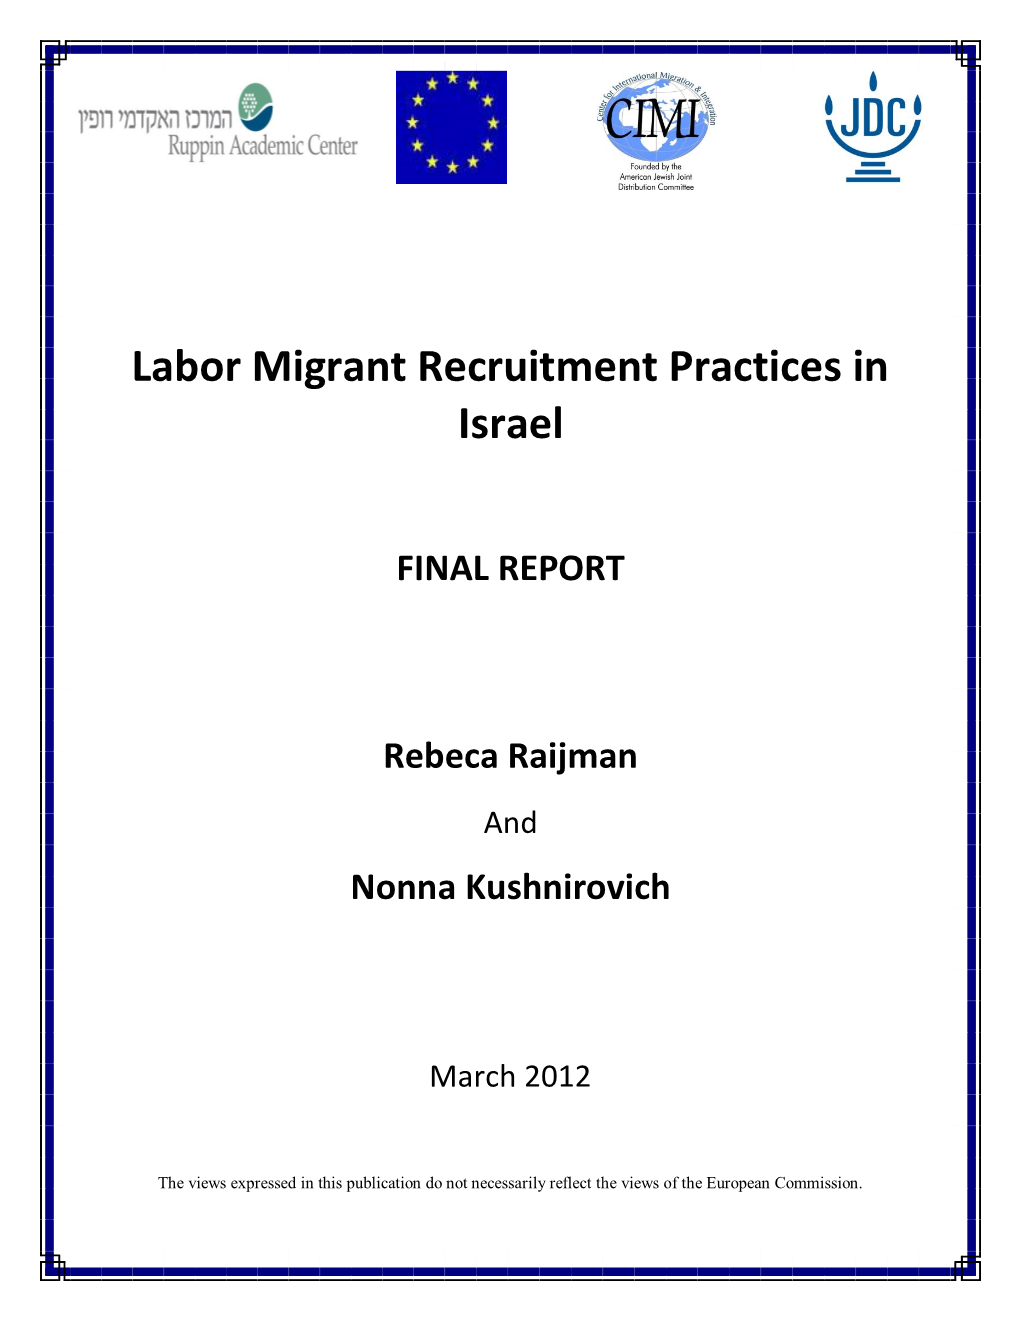 Labor Migrant Recruitment Practices in Israel